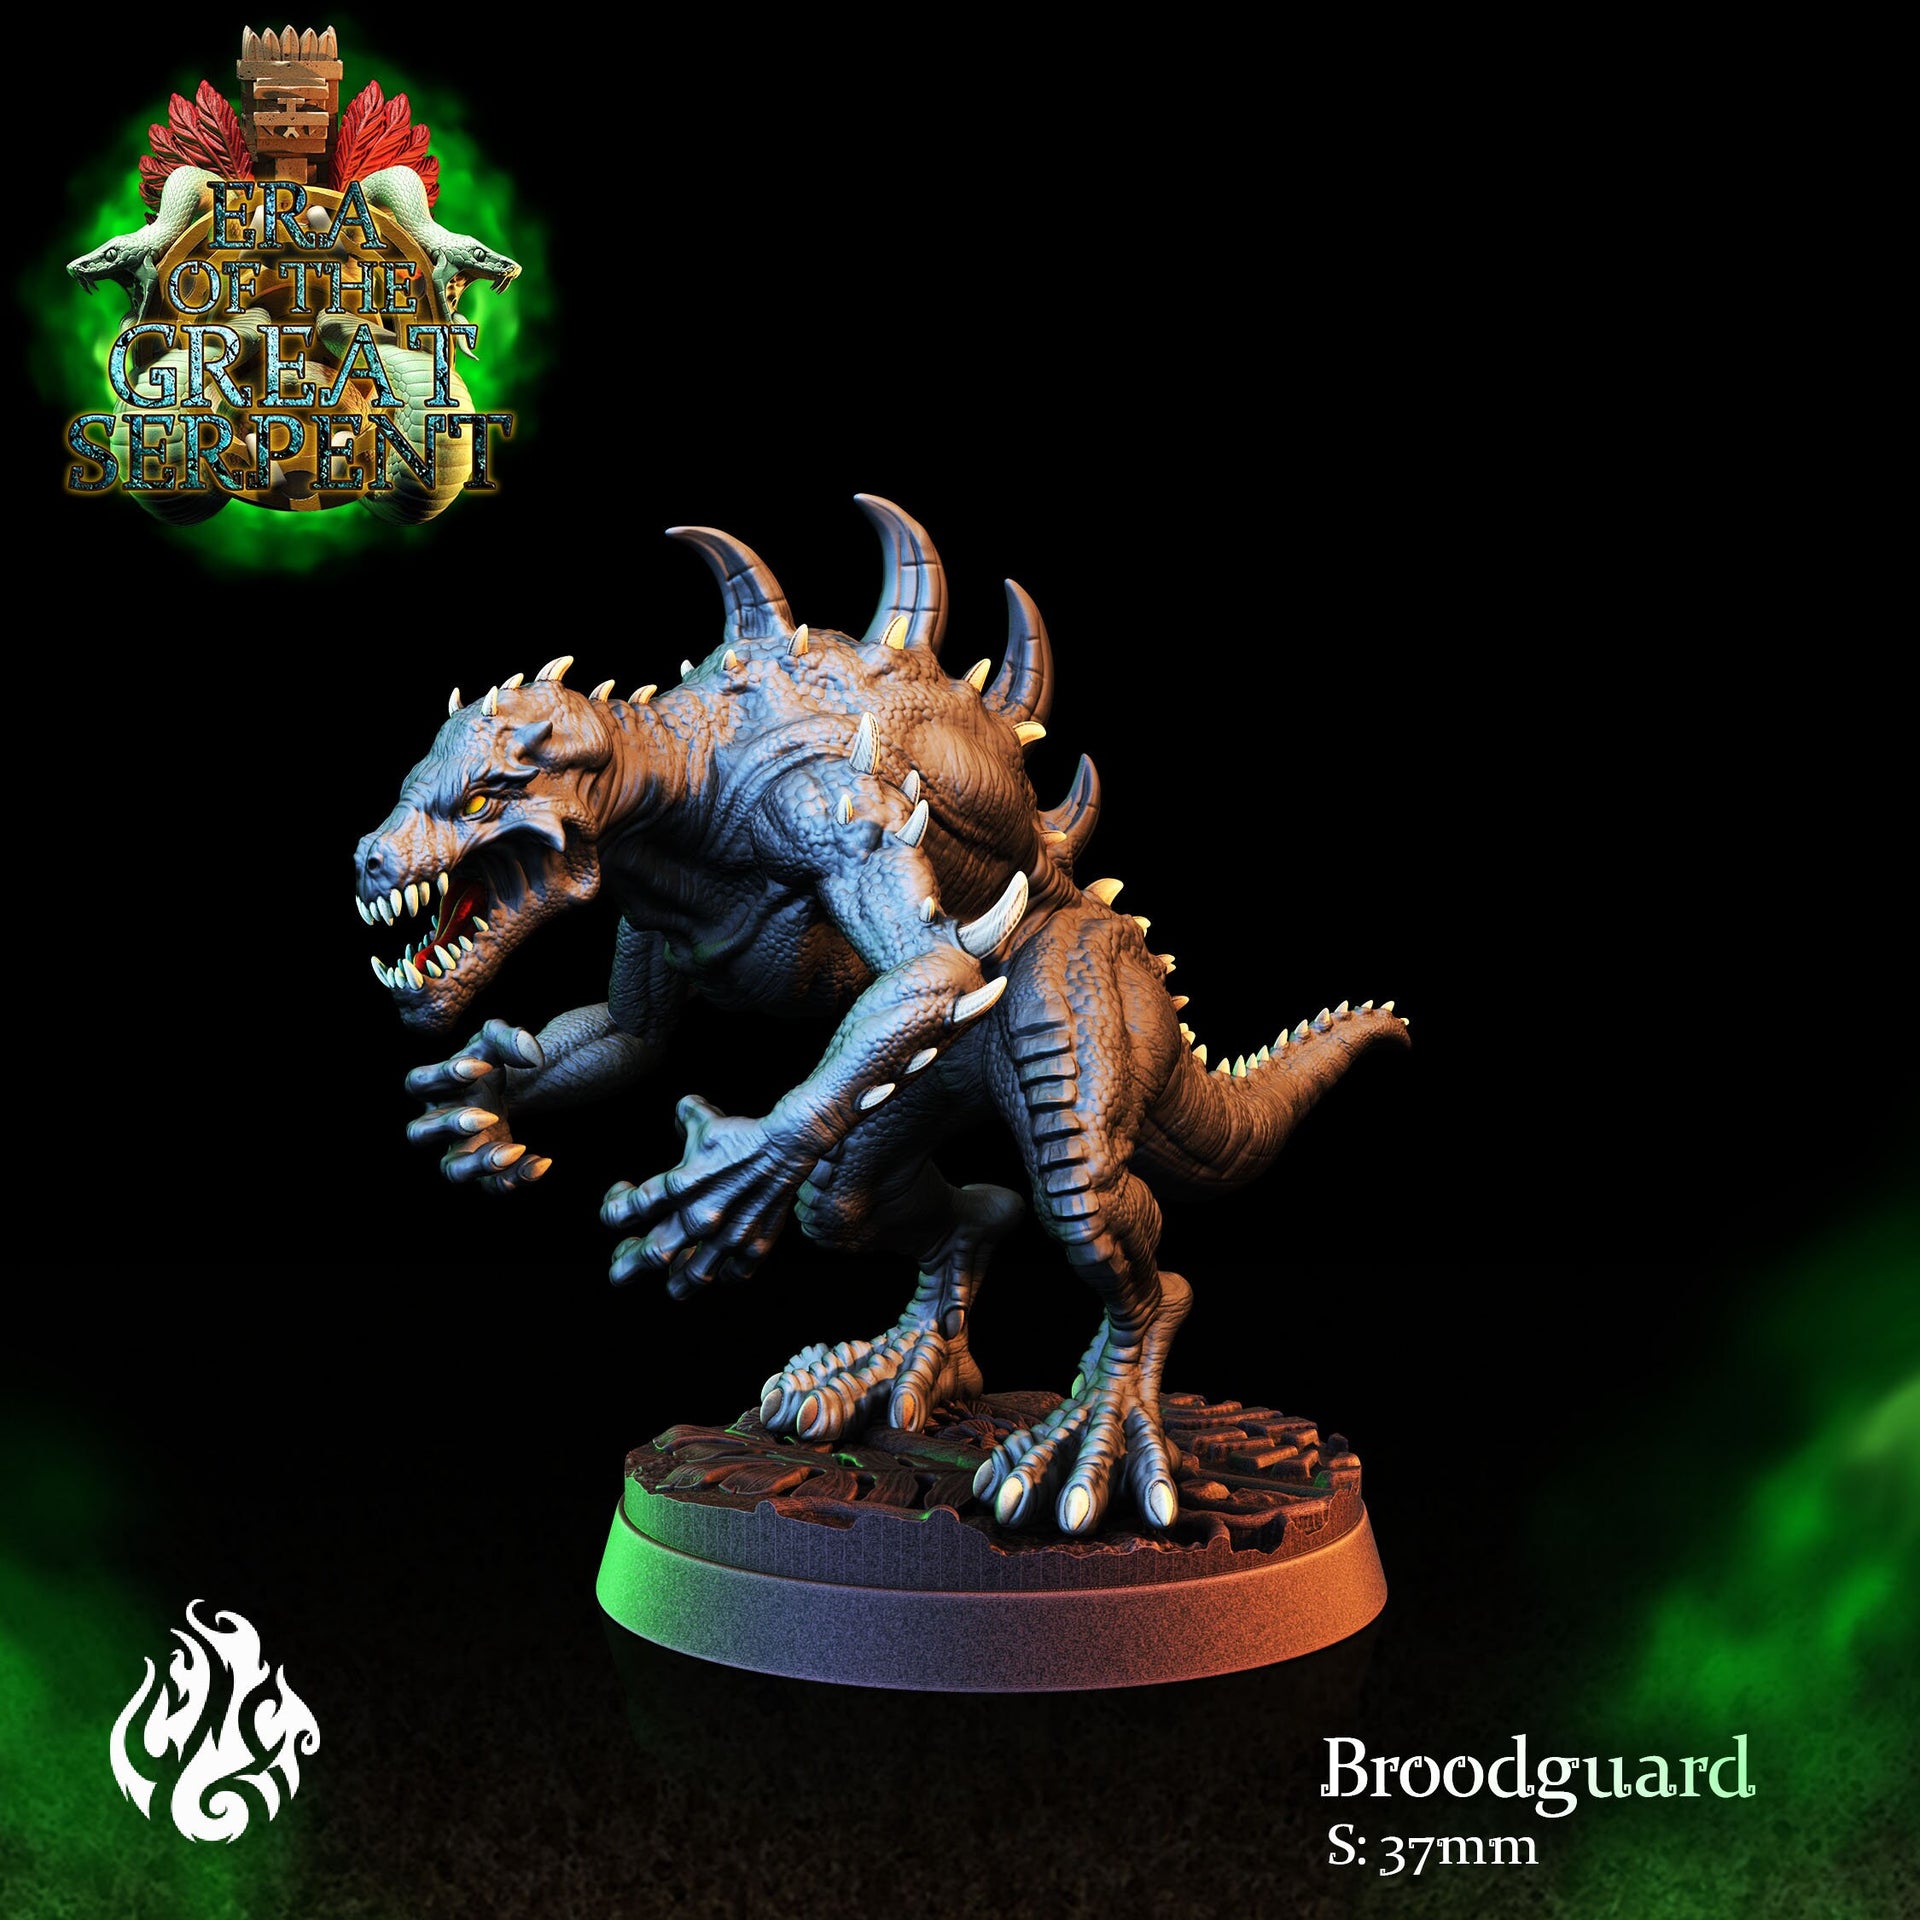 Broodguard - Crippled God Foundry - Era of the Great Serpent  